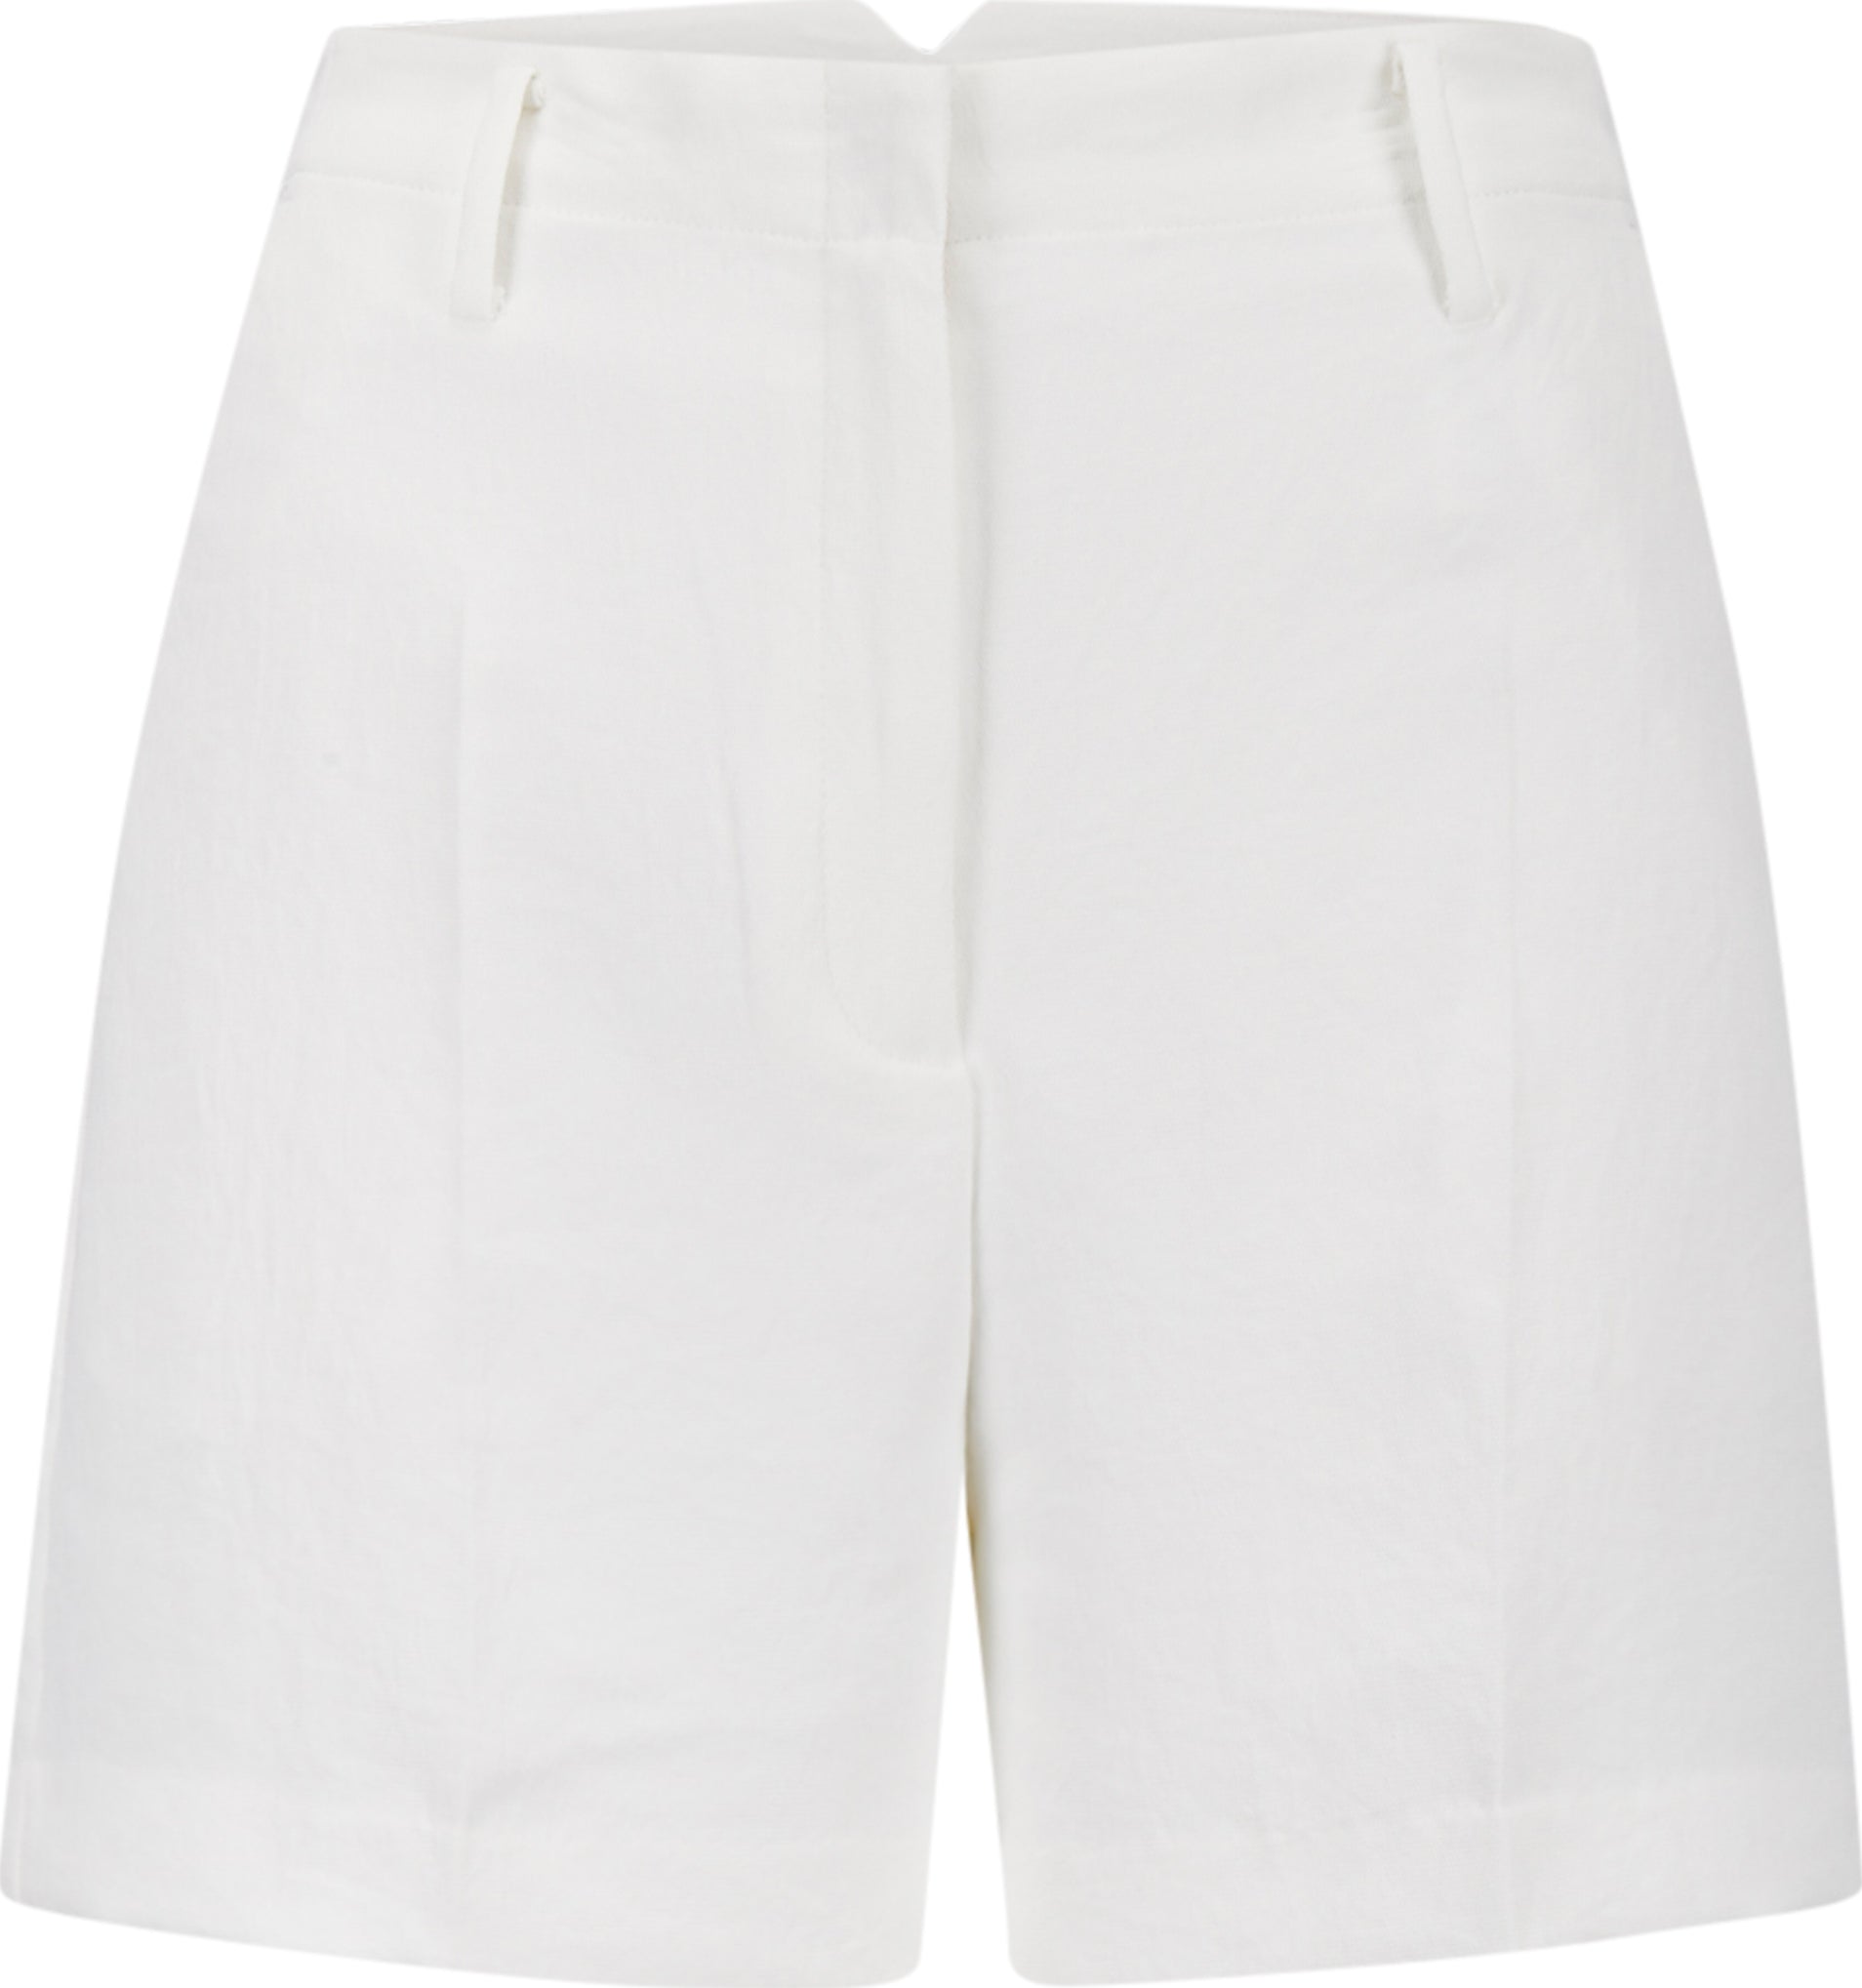 michael kors white shorts